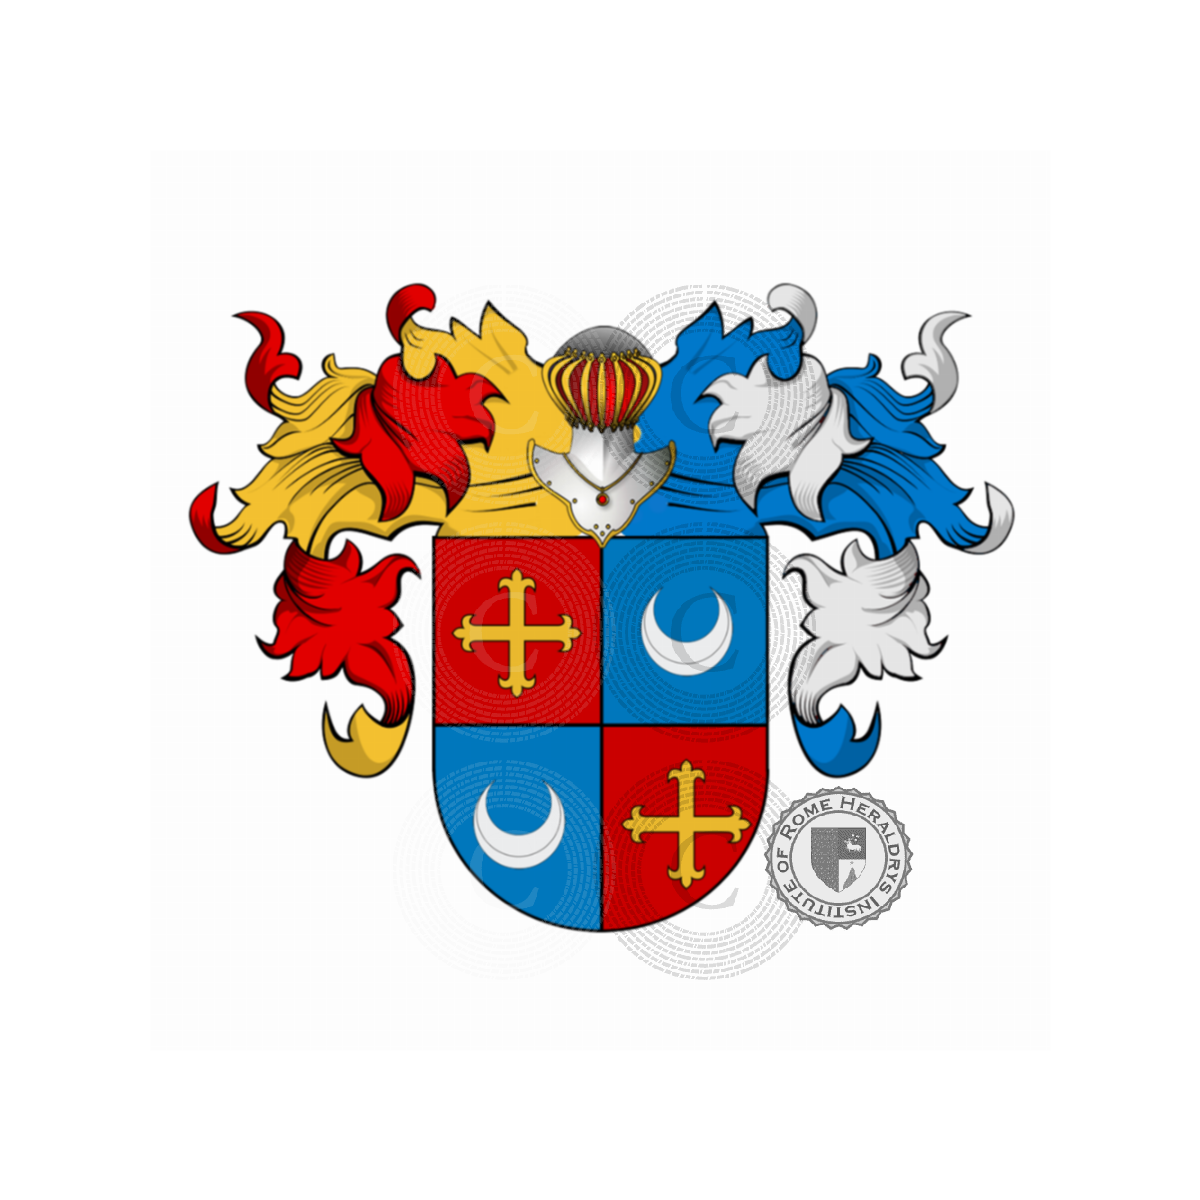 Wappen der FamilieLerma, de Lerma